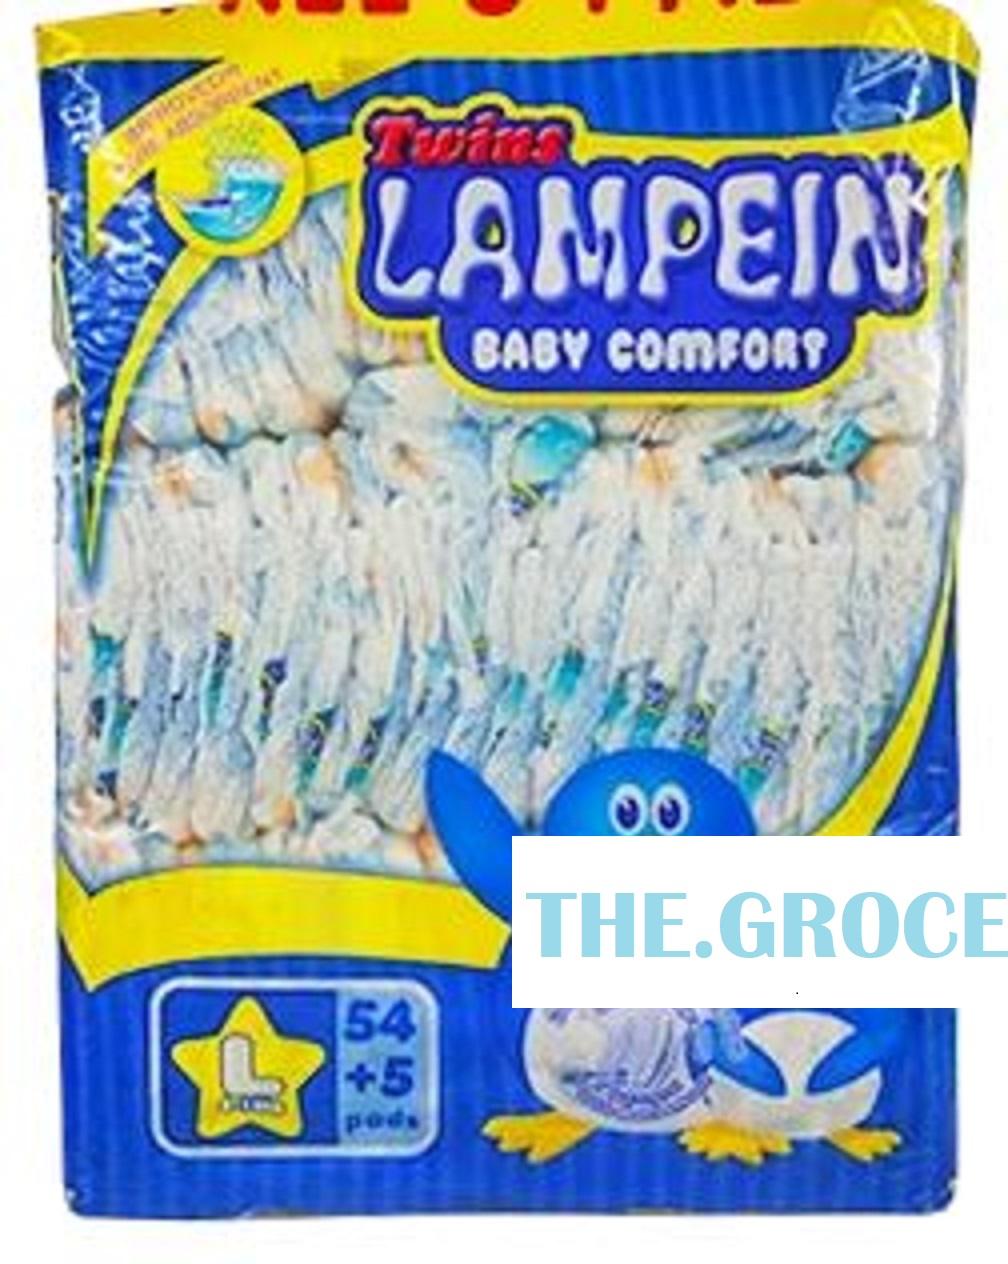 lampein diaper newborn price